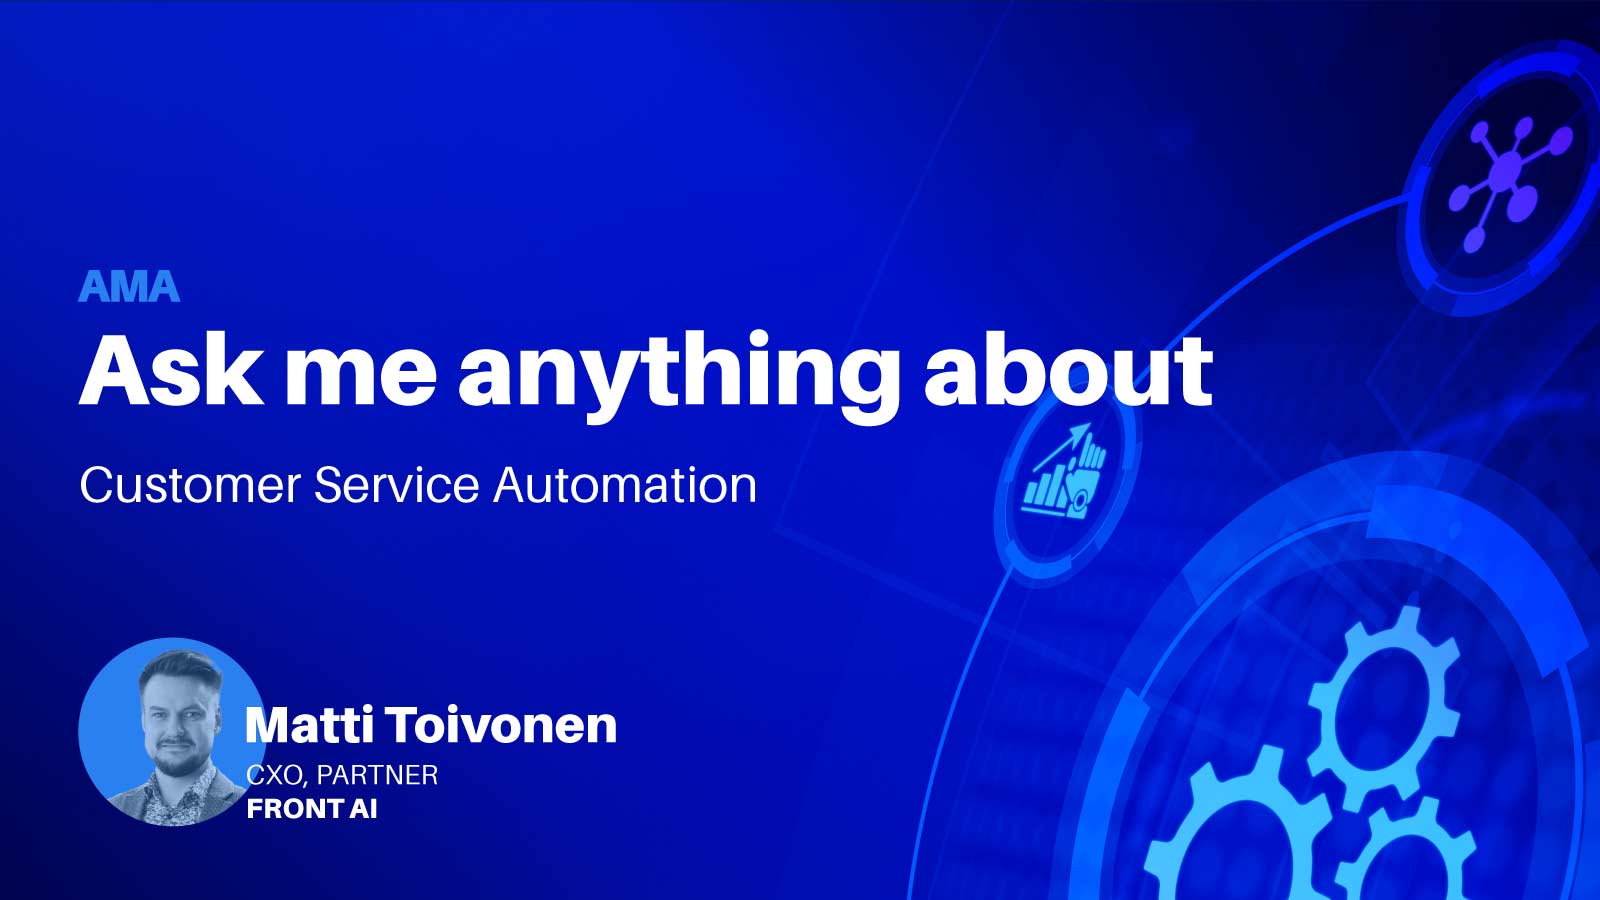 01_AMA-Customer-Service-Automation